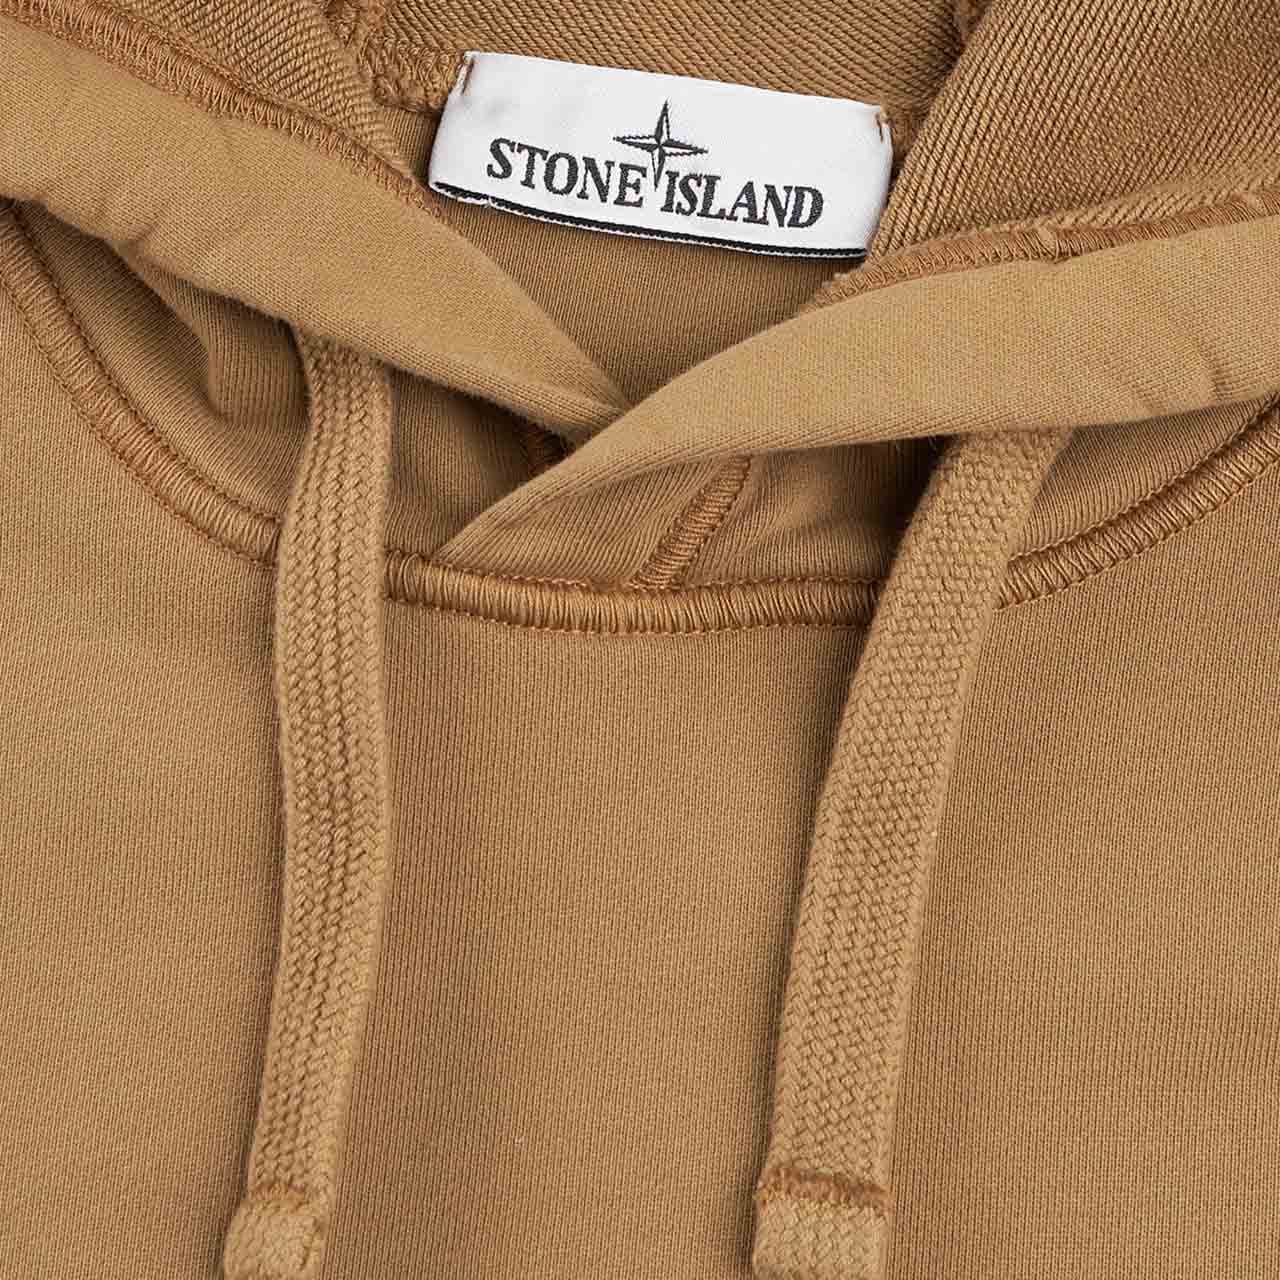 stone island hooded sweatshirt (dark beige)